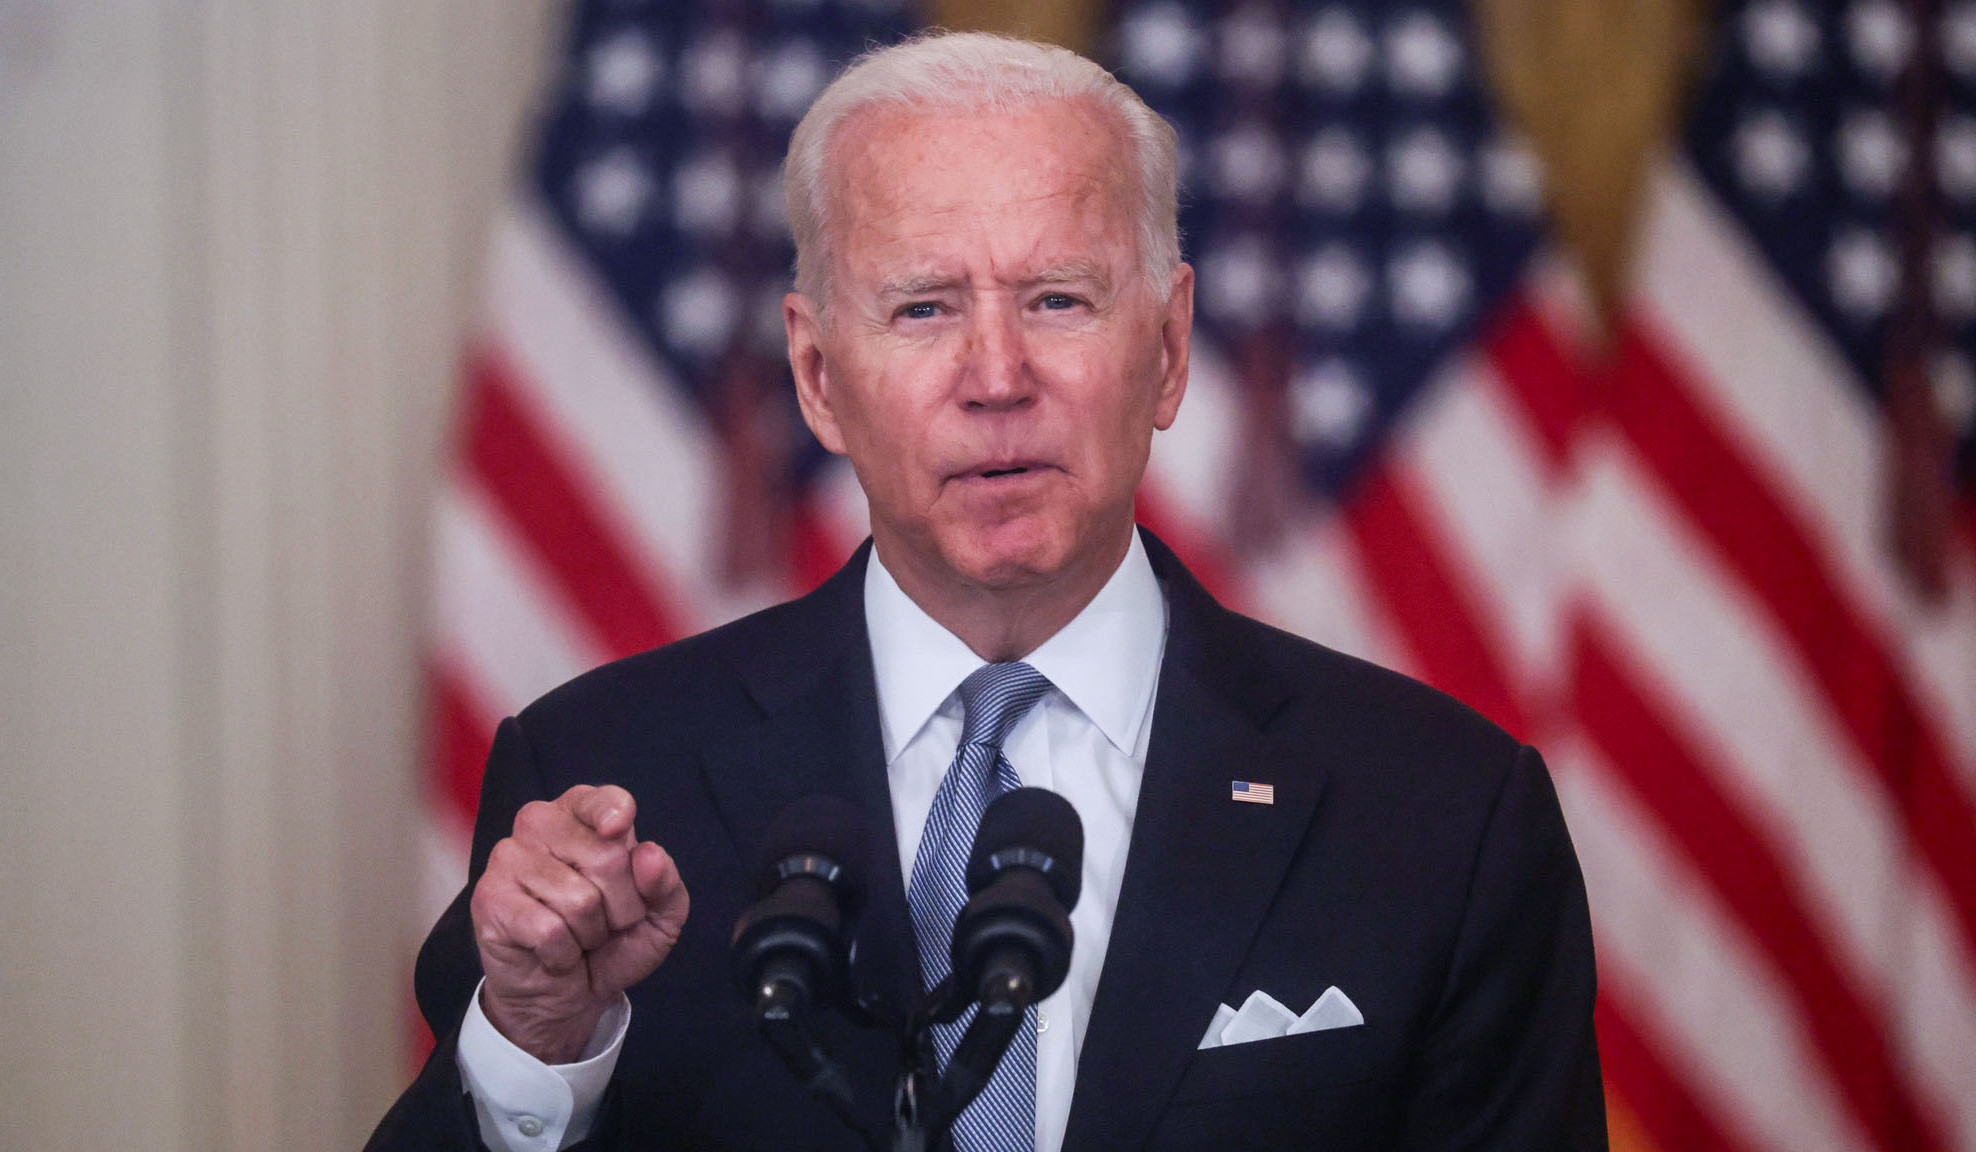 President Joe Biden's approval rating hits new low in latest Quinnipiac poll